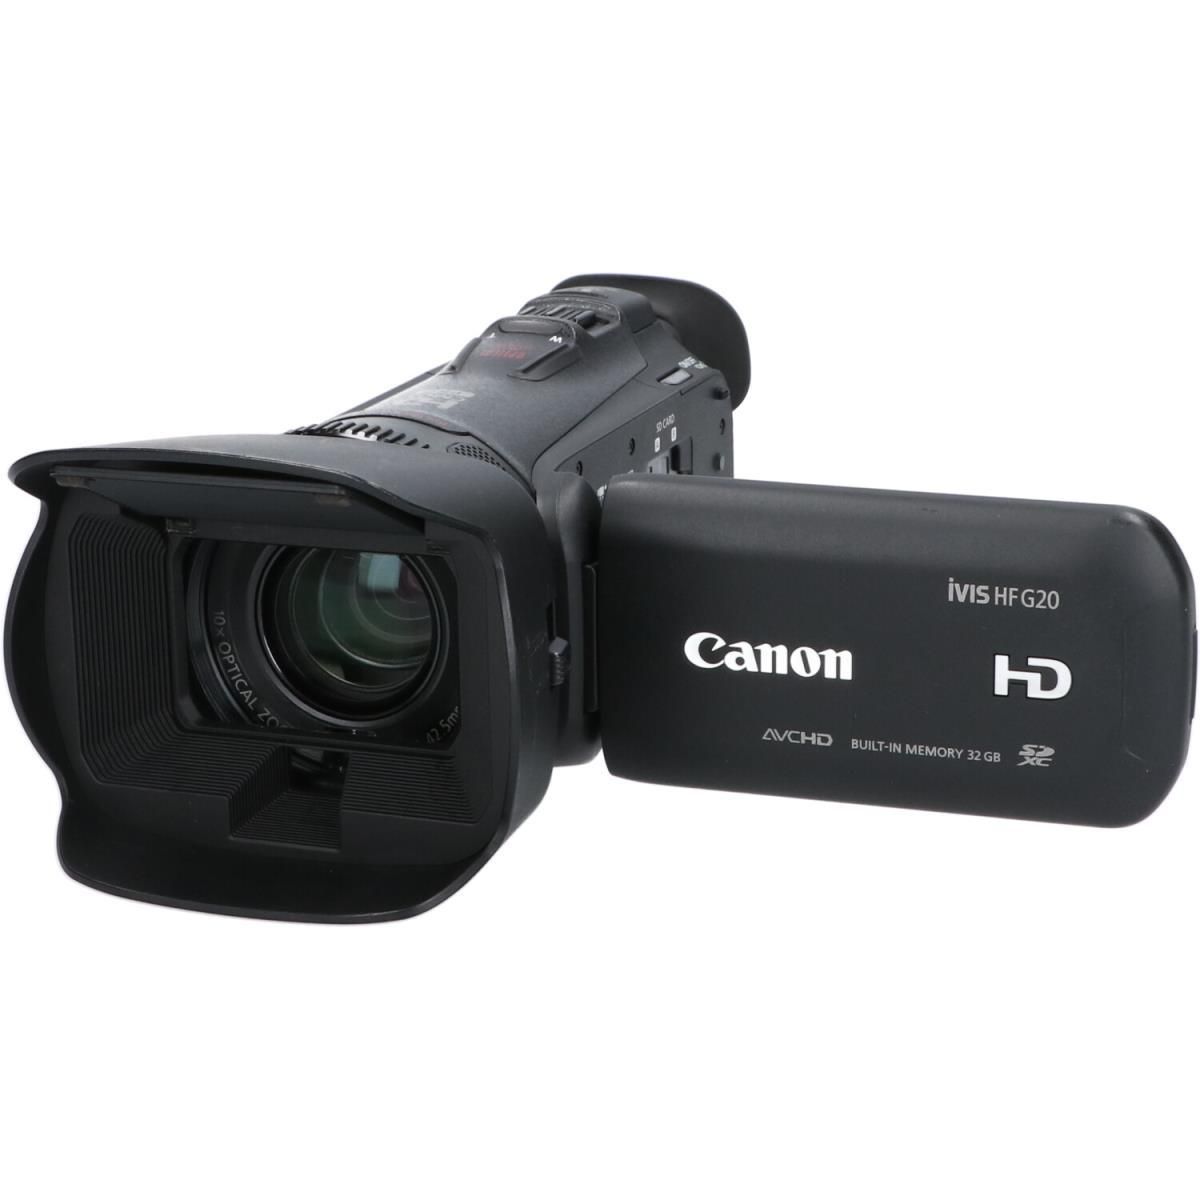 Canon キヤノン デジタルビデオカメラ IVISHFG20 - ビデオカメラ